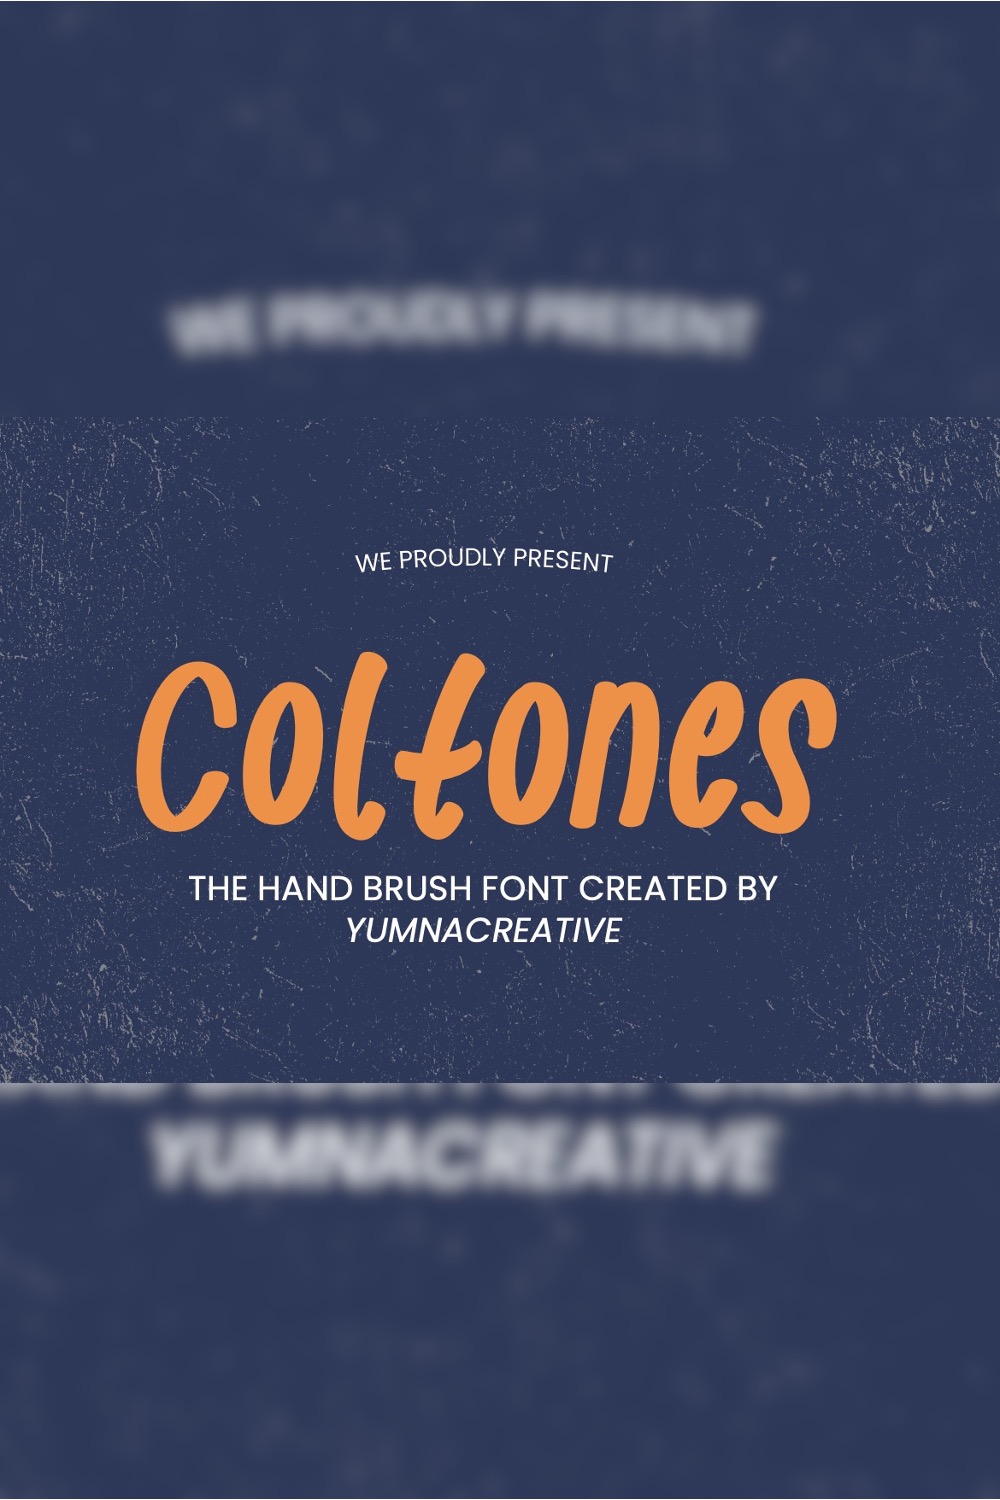 Coltones - Hand Brush Font pinterest preview image.